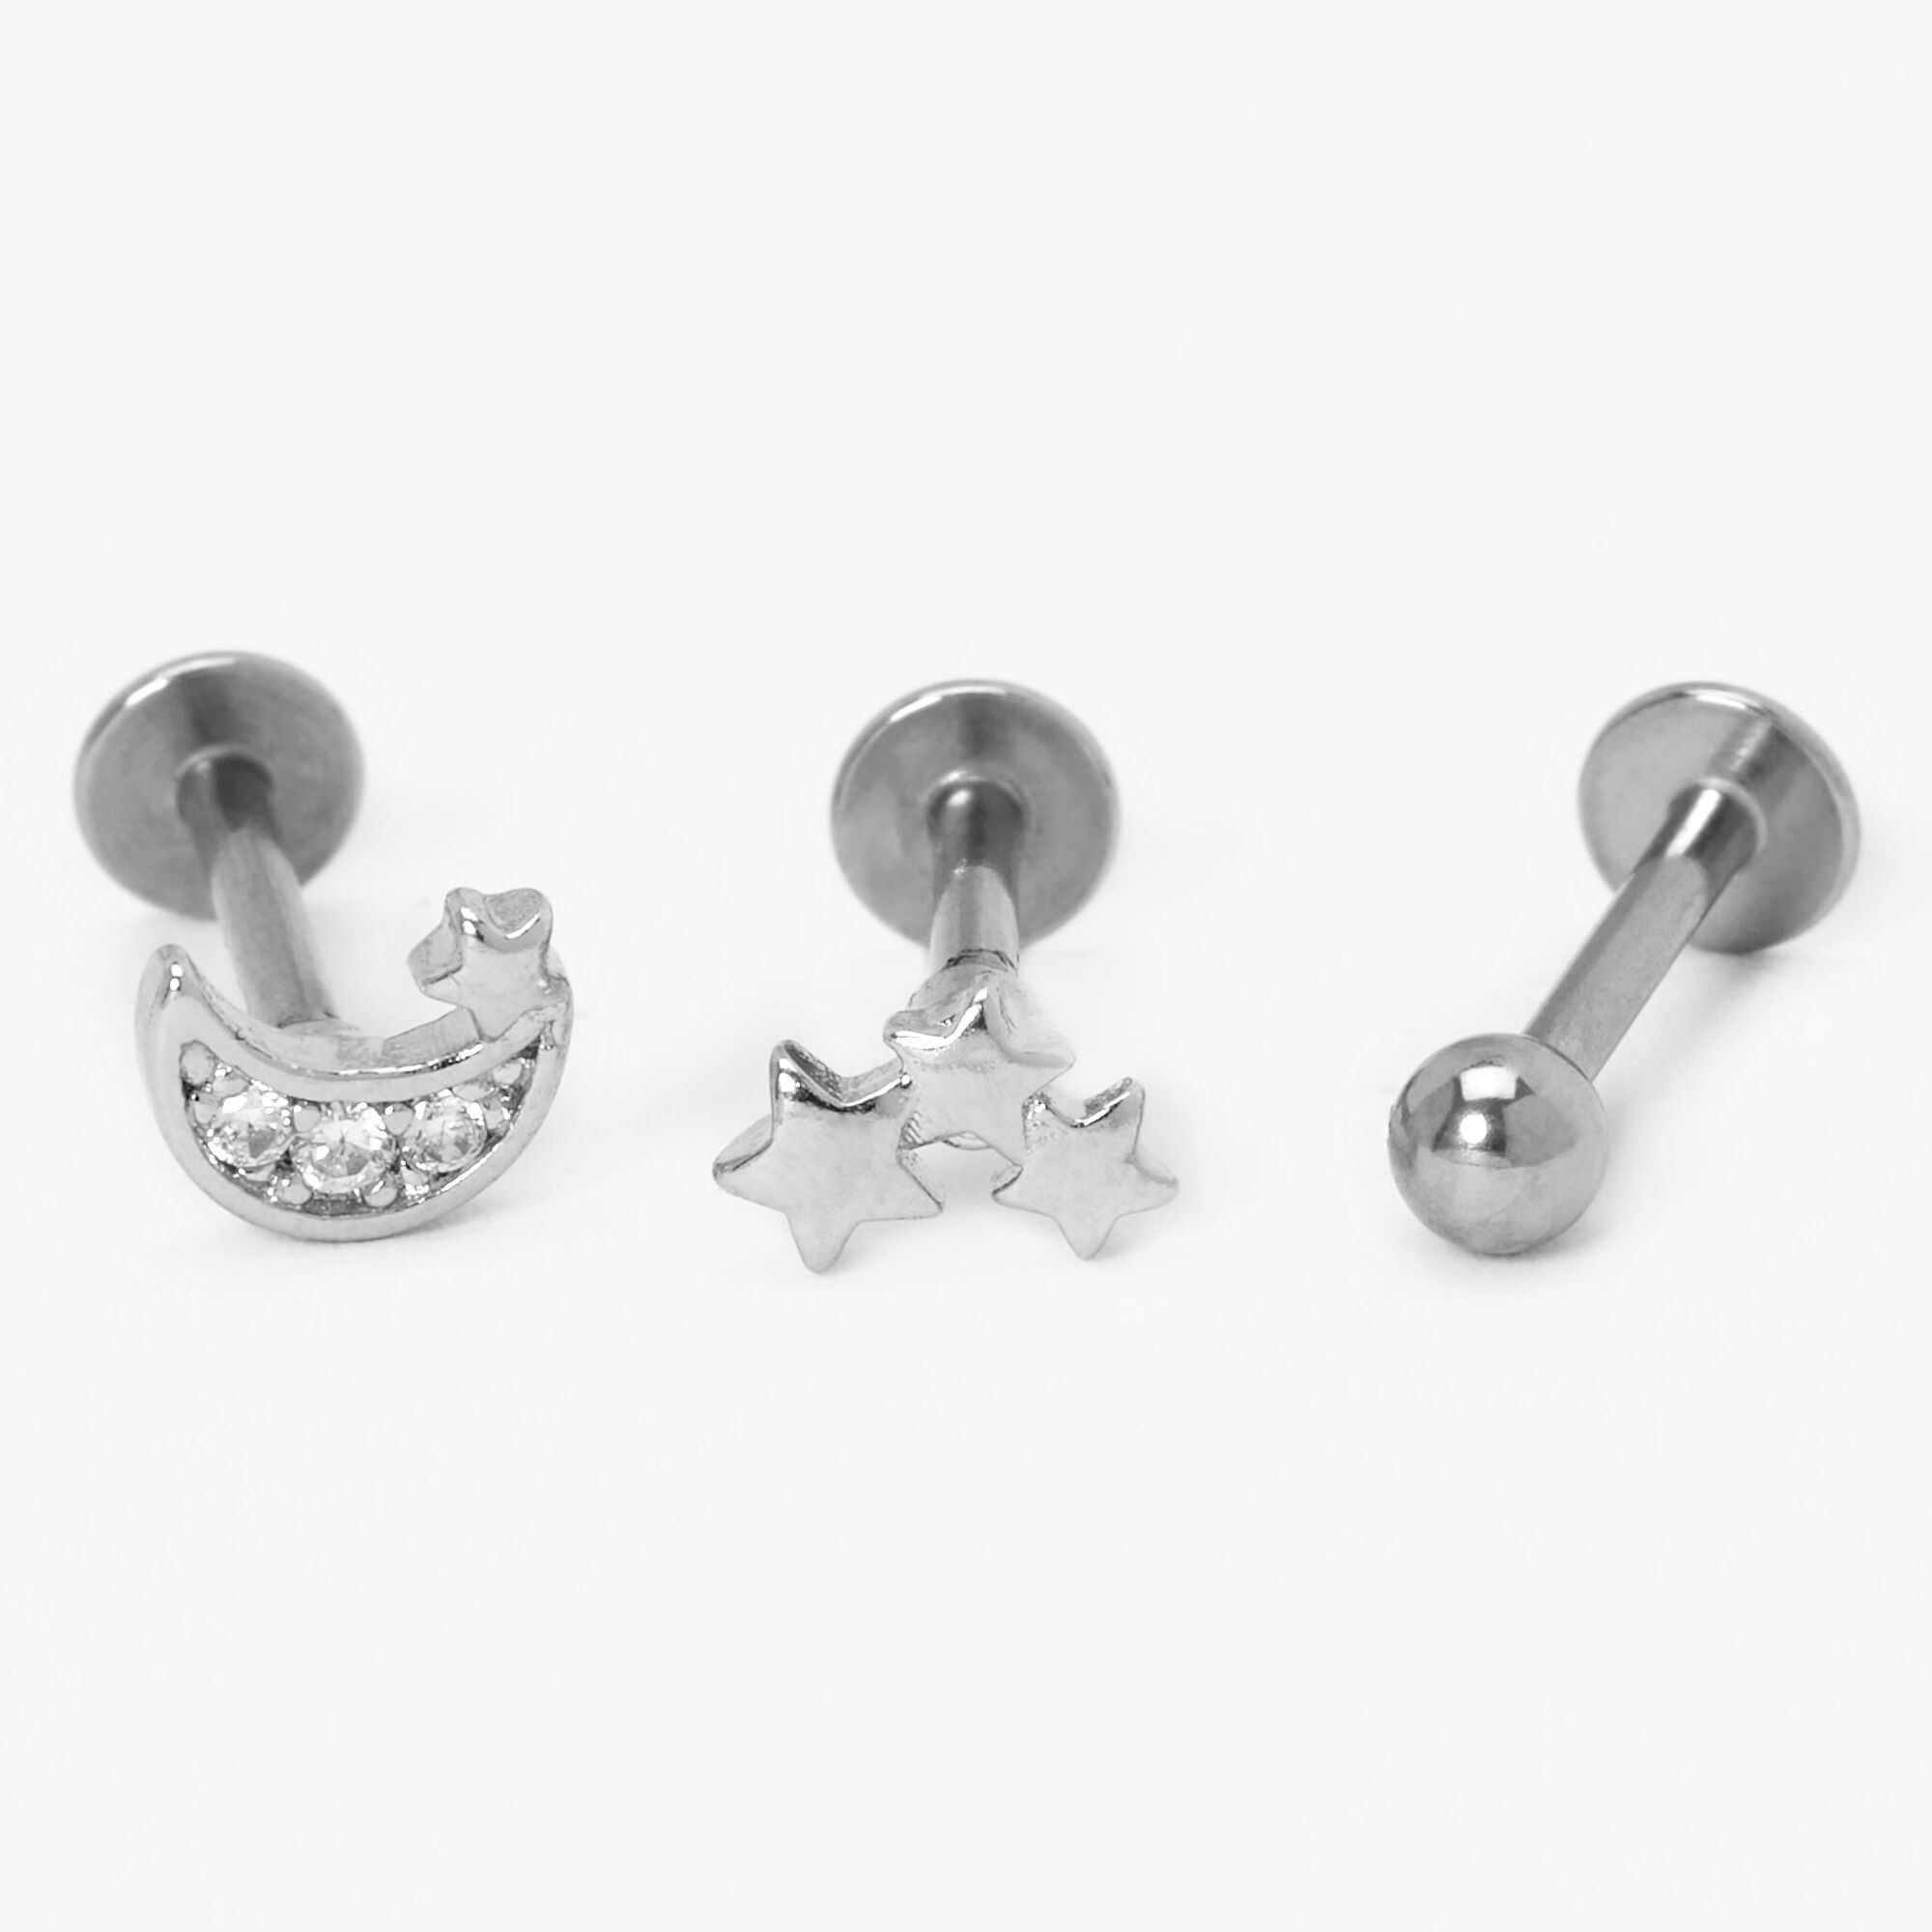 Buy Silver Hoop Earrings Cartilage Earring Small Hoop Earrings for Women  Men Girls4 Pairs of Hypoallergenic 925 Sterling Silver Tragus Earrings8mm10mm12mm14mm  at Amazonin